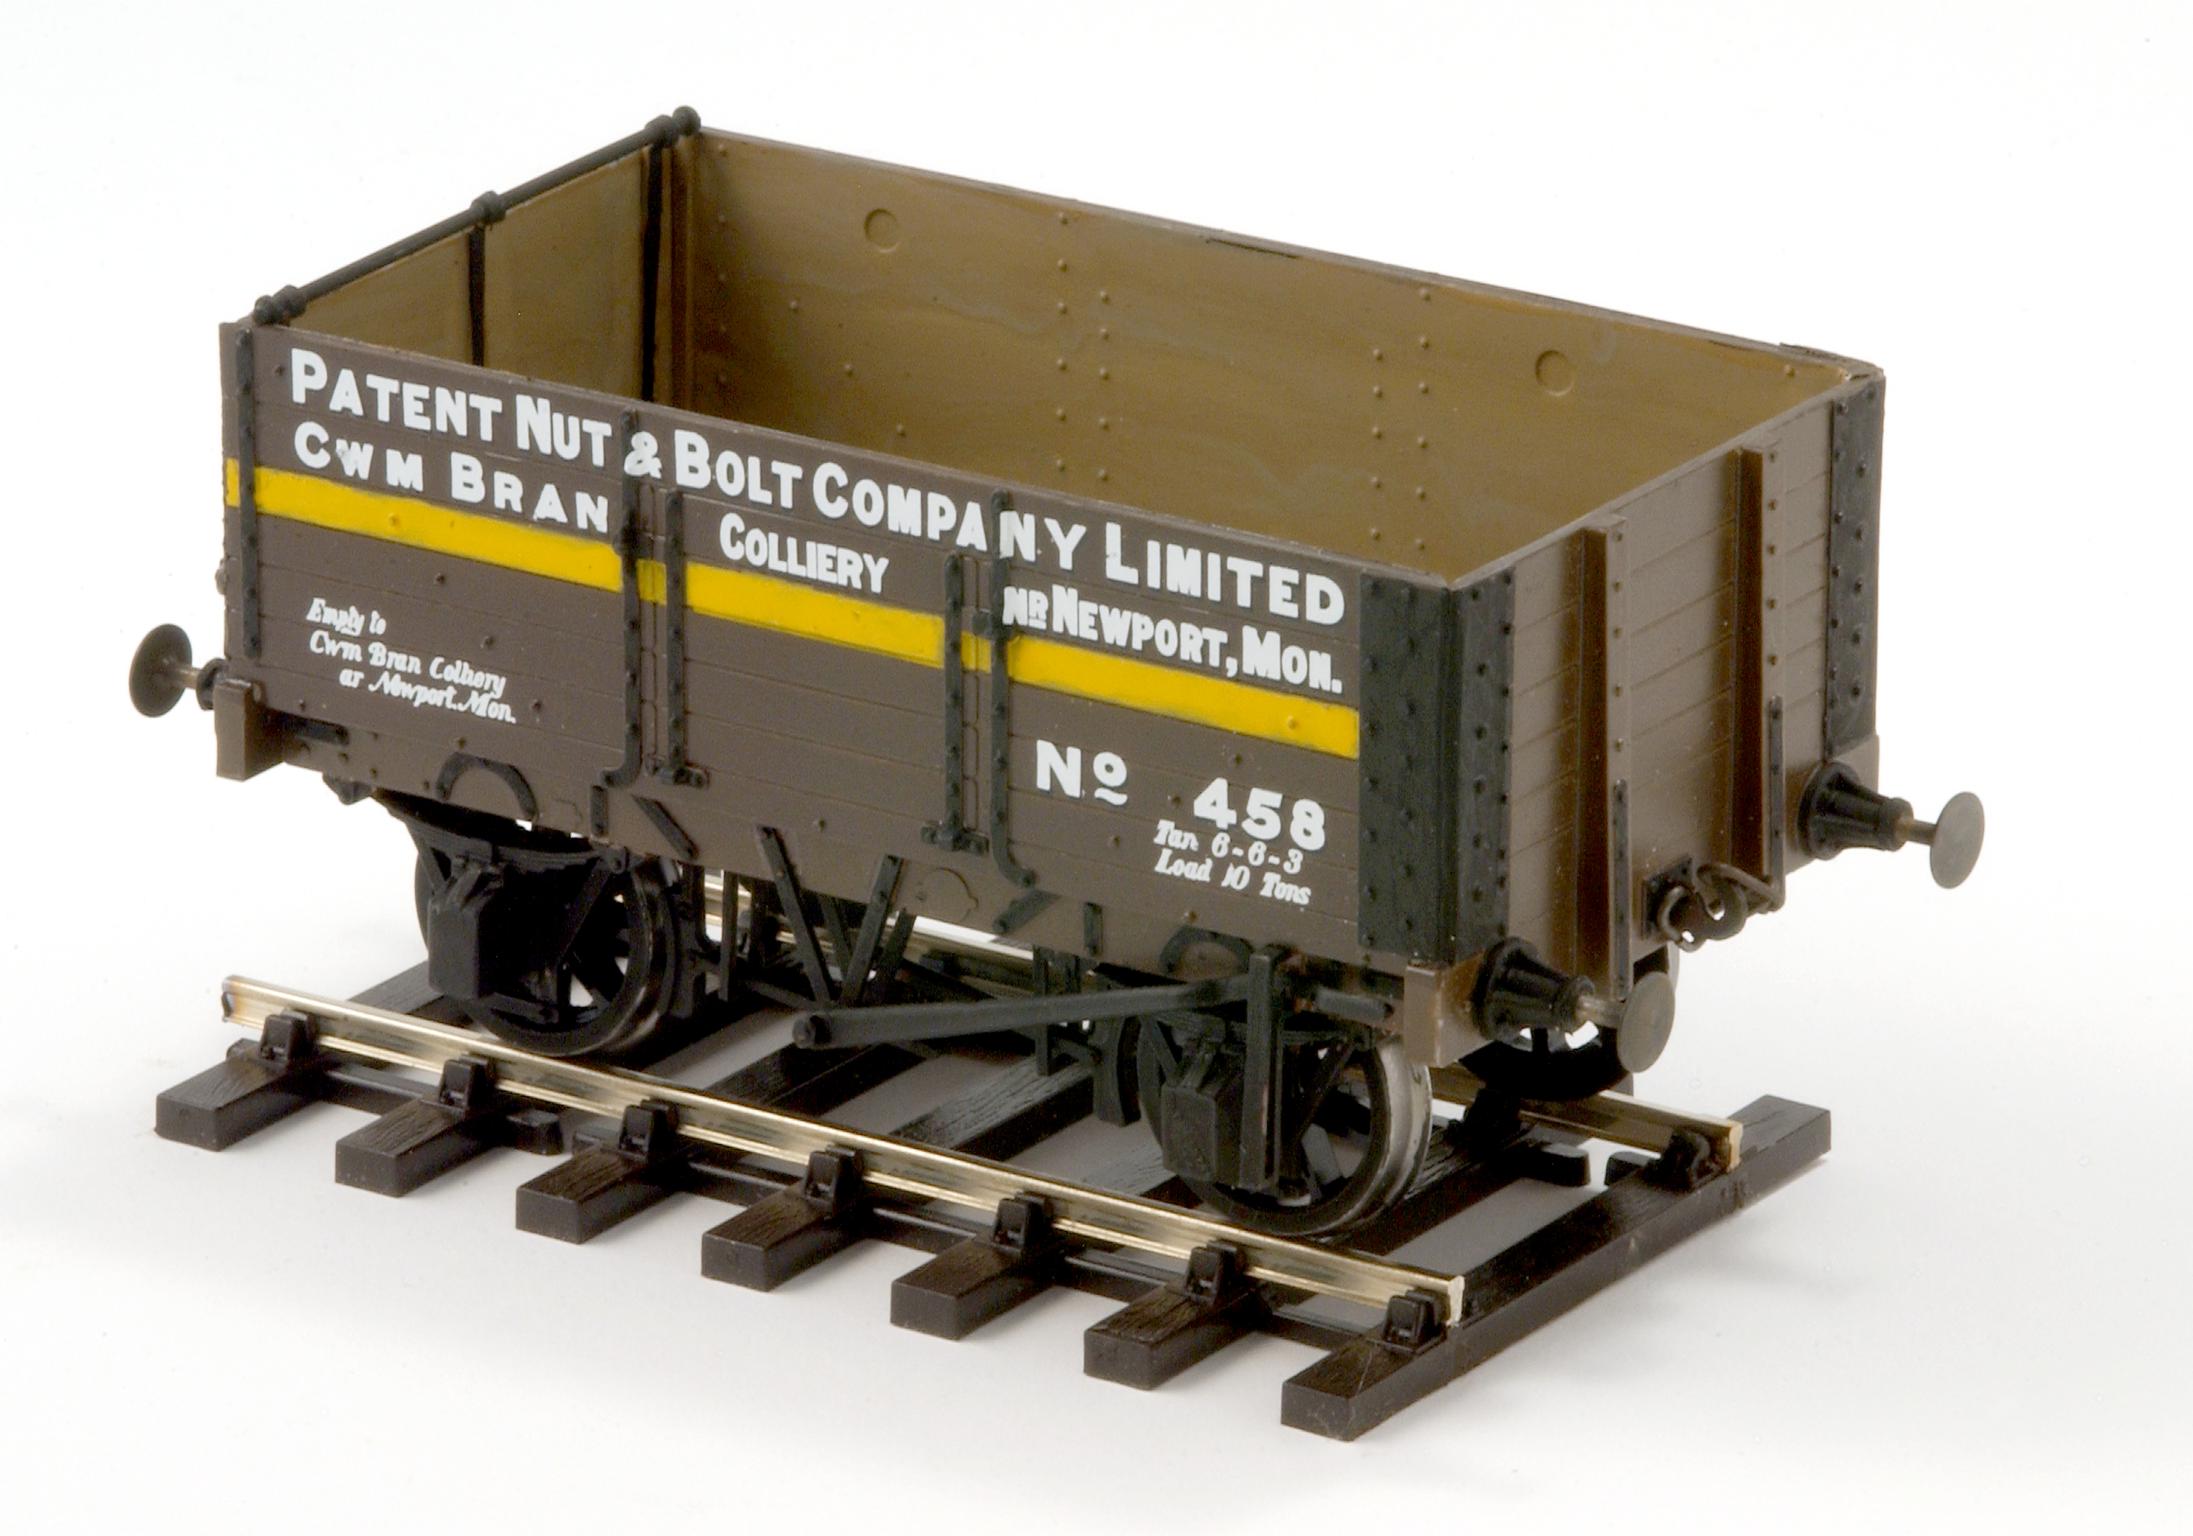 Patent Nut & Bolt Co. Ltd., coal wagon model